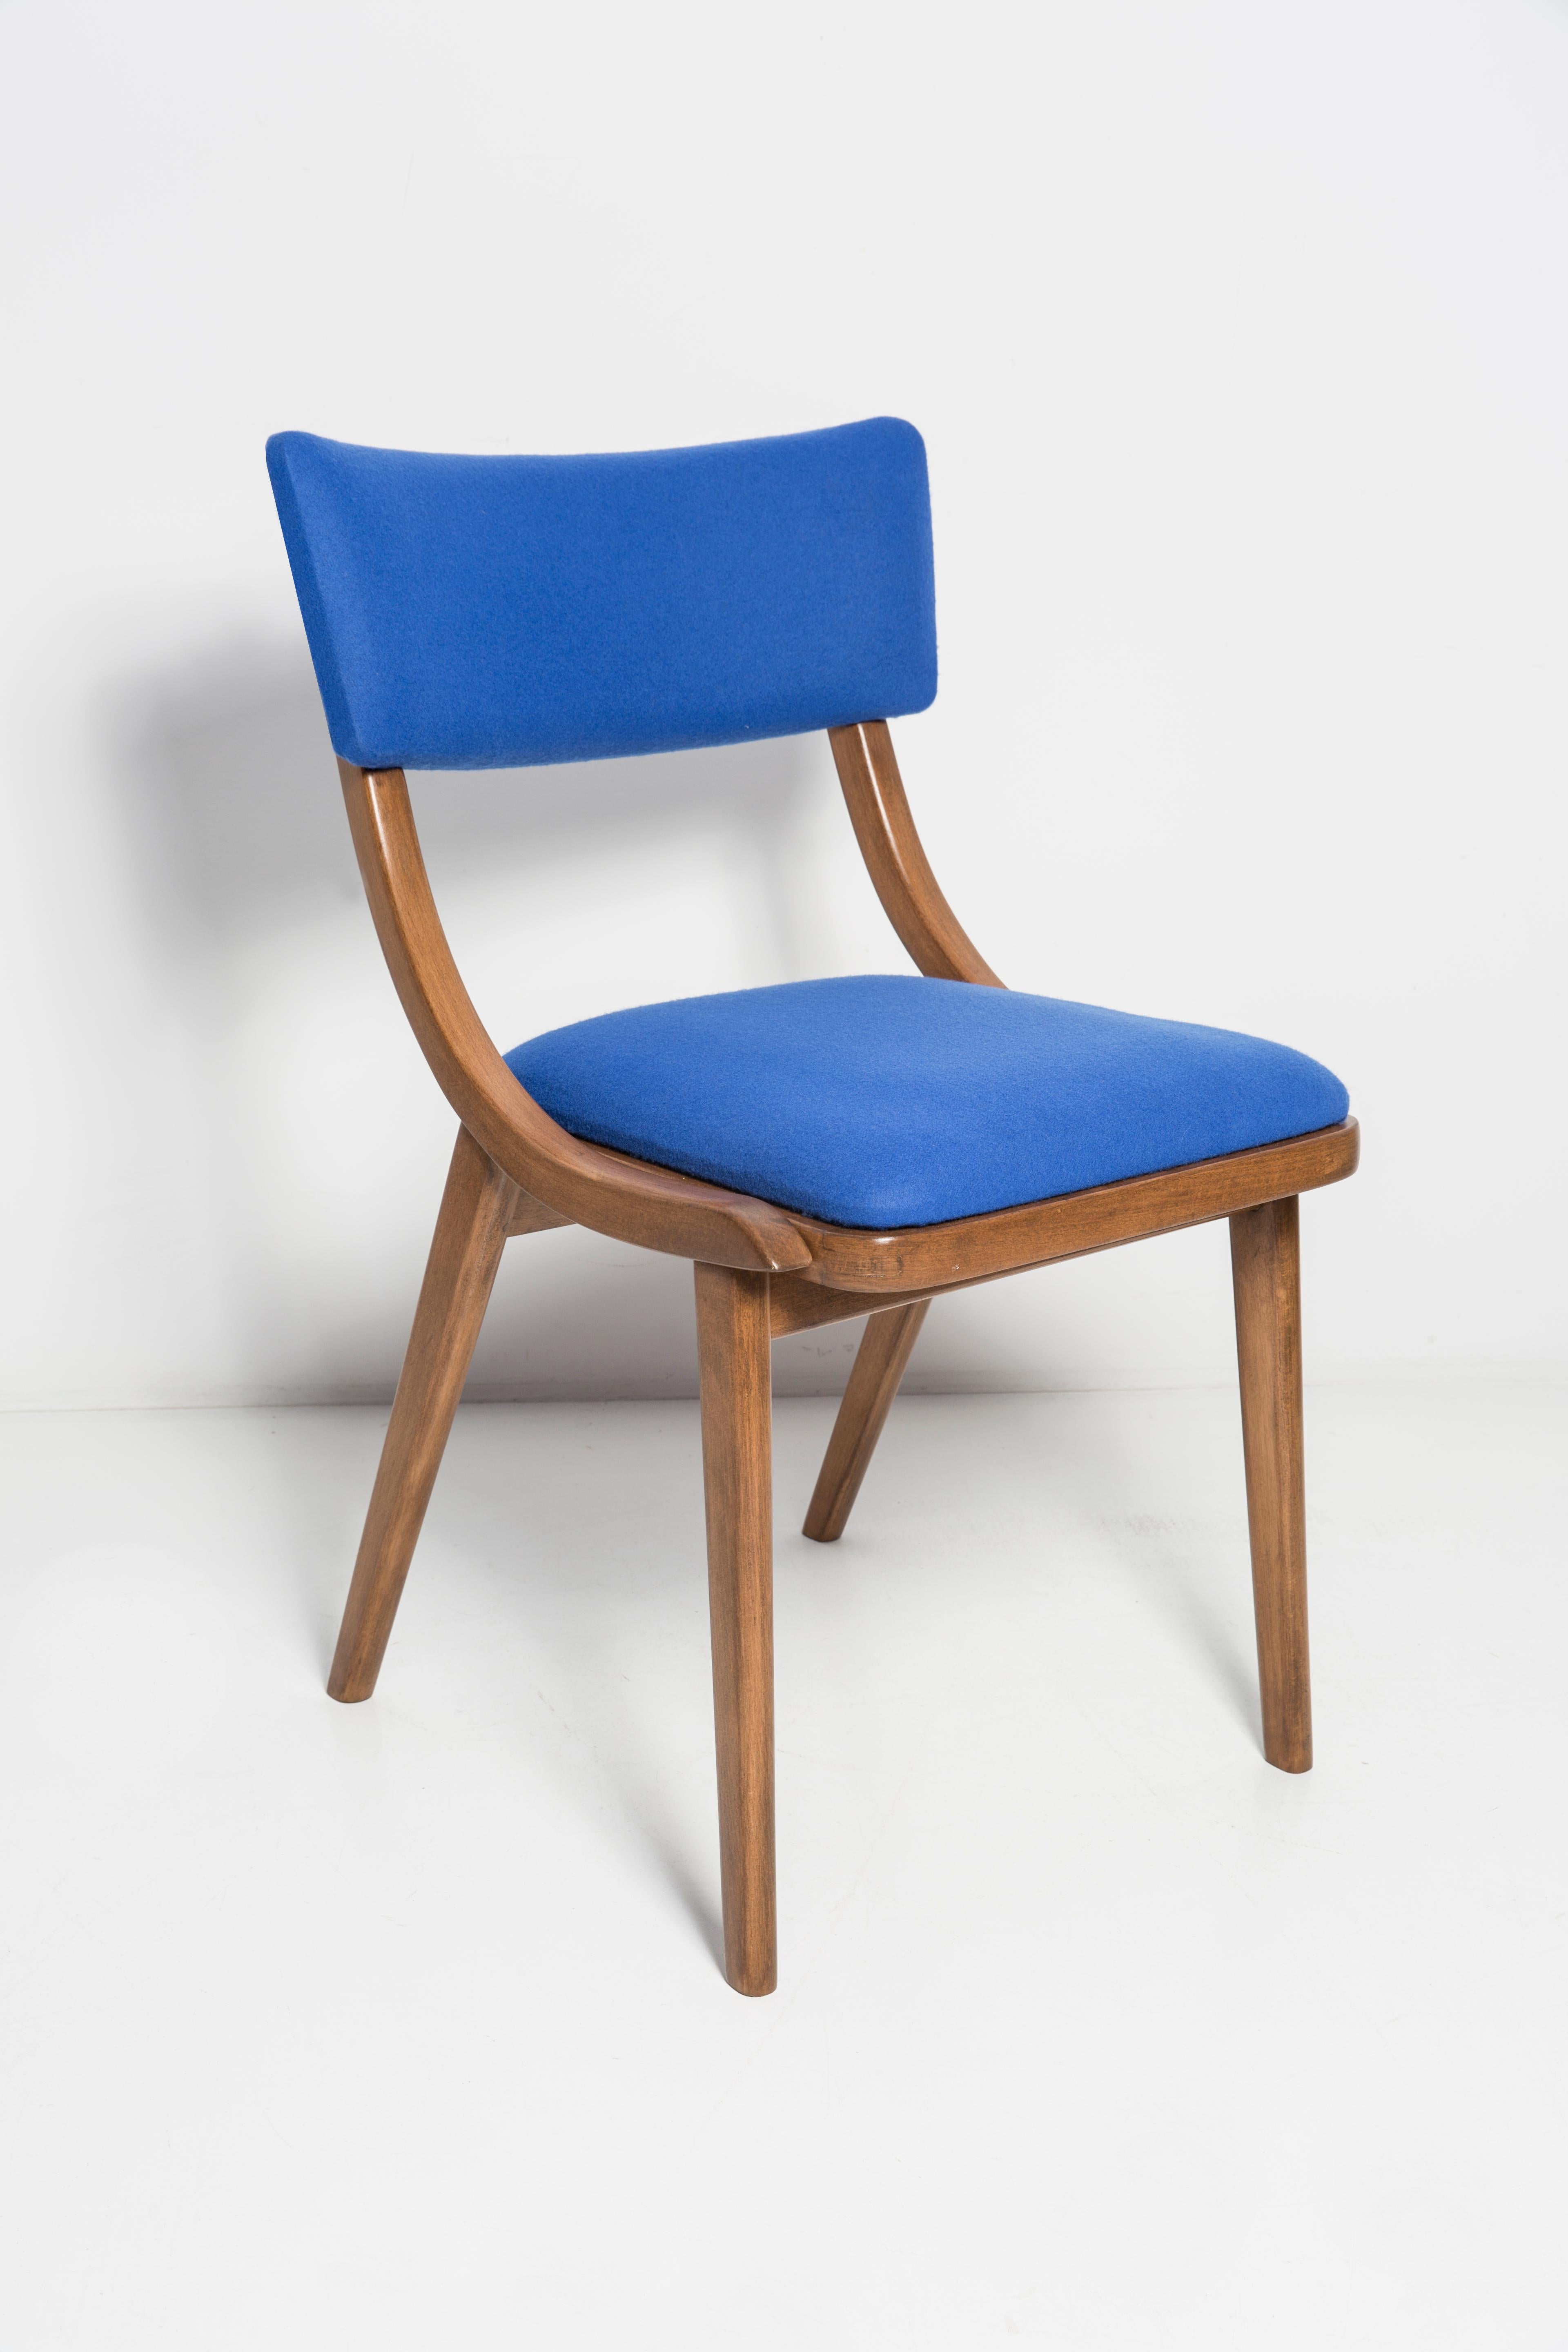 Polish Set of Six Mid Century Modern Bumerang Chairs, Royal Blue Wool, Poland, 1960s For Sale